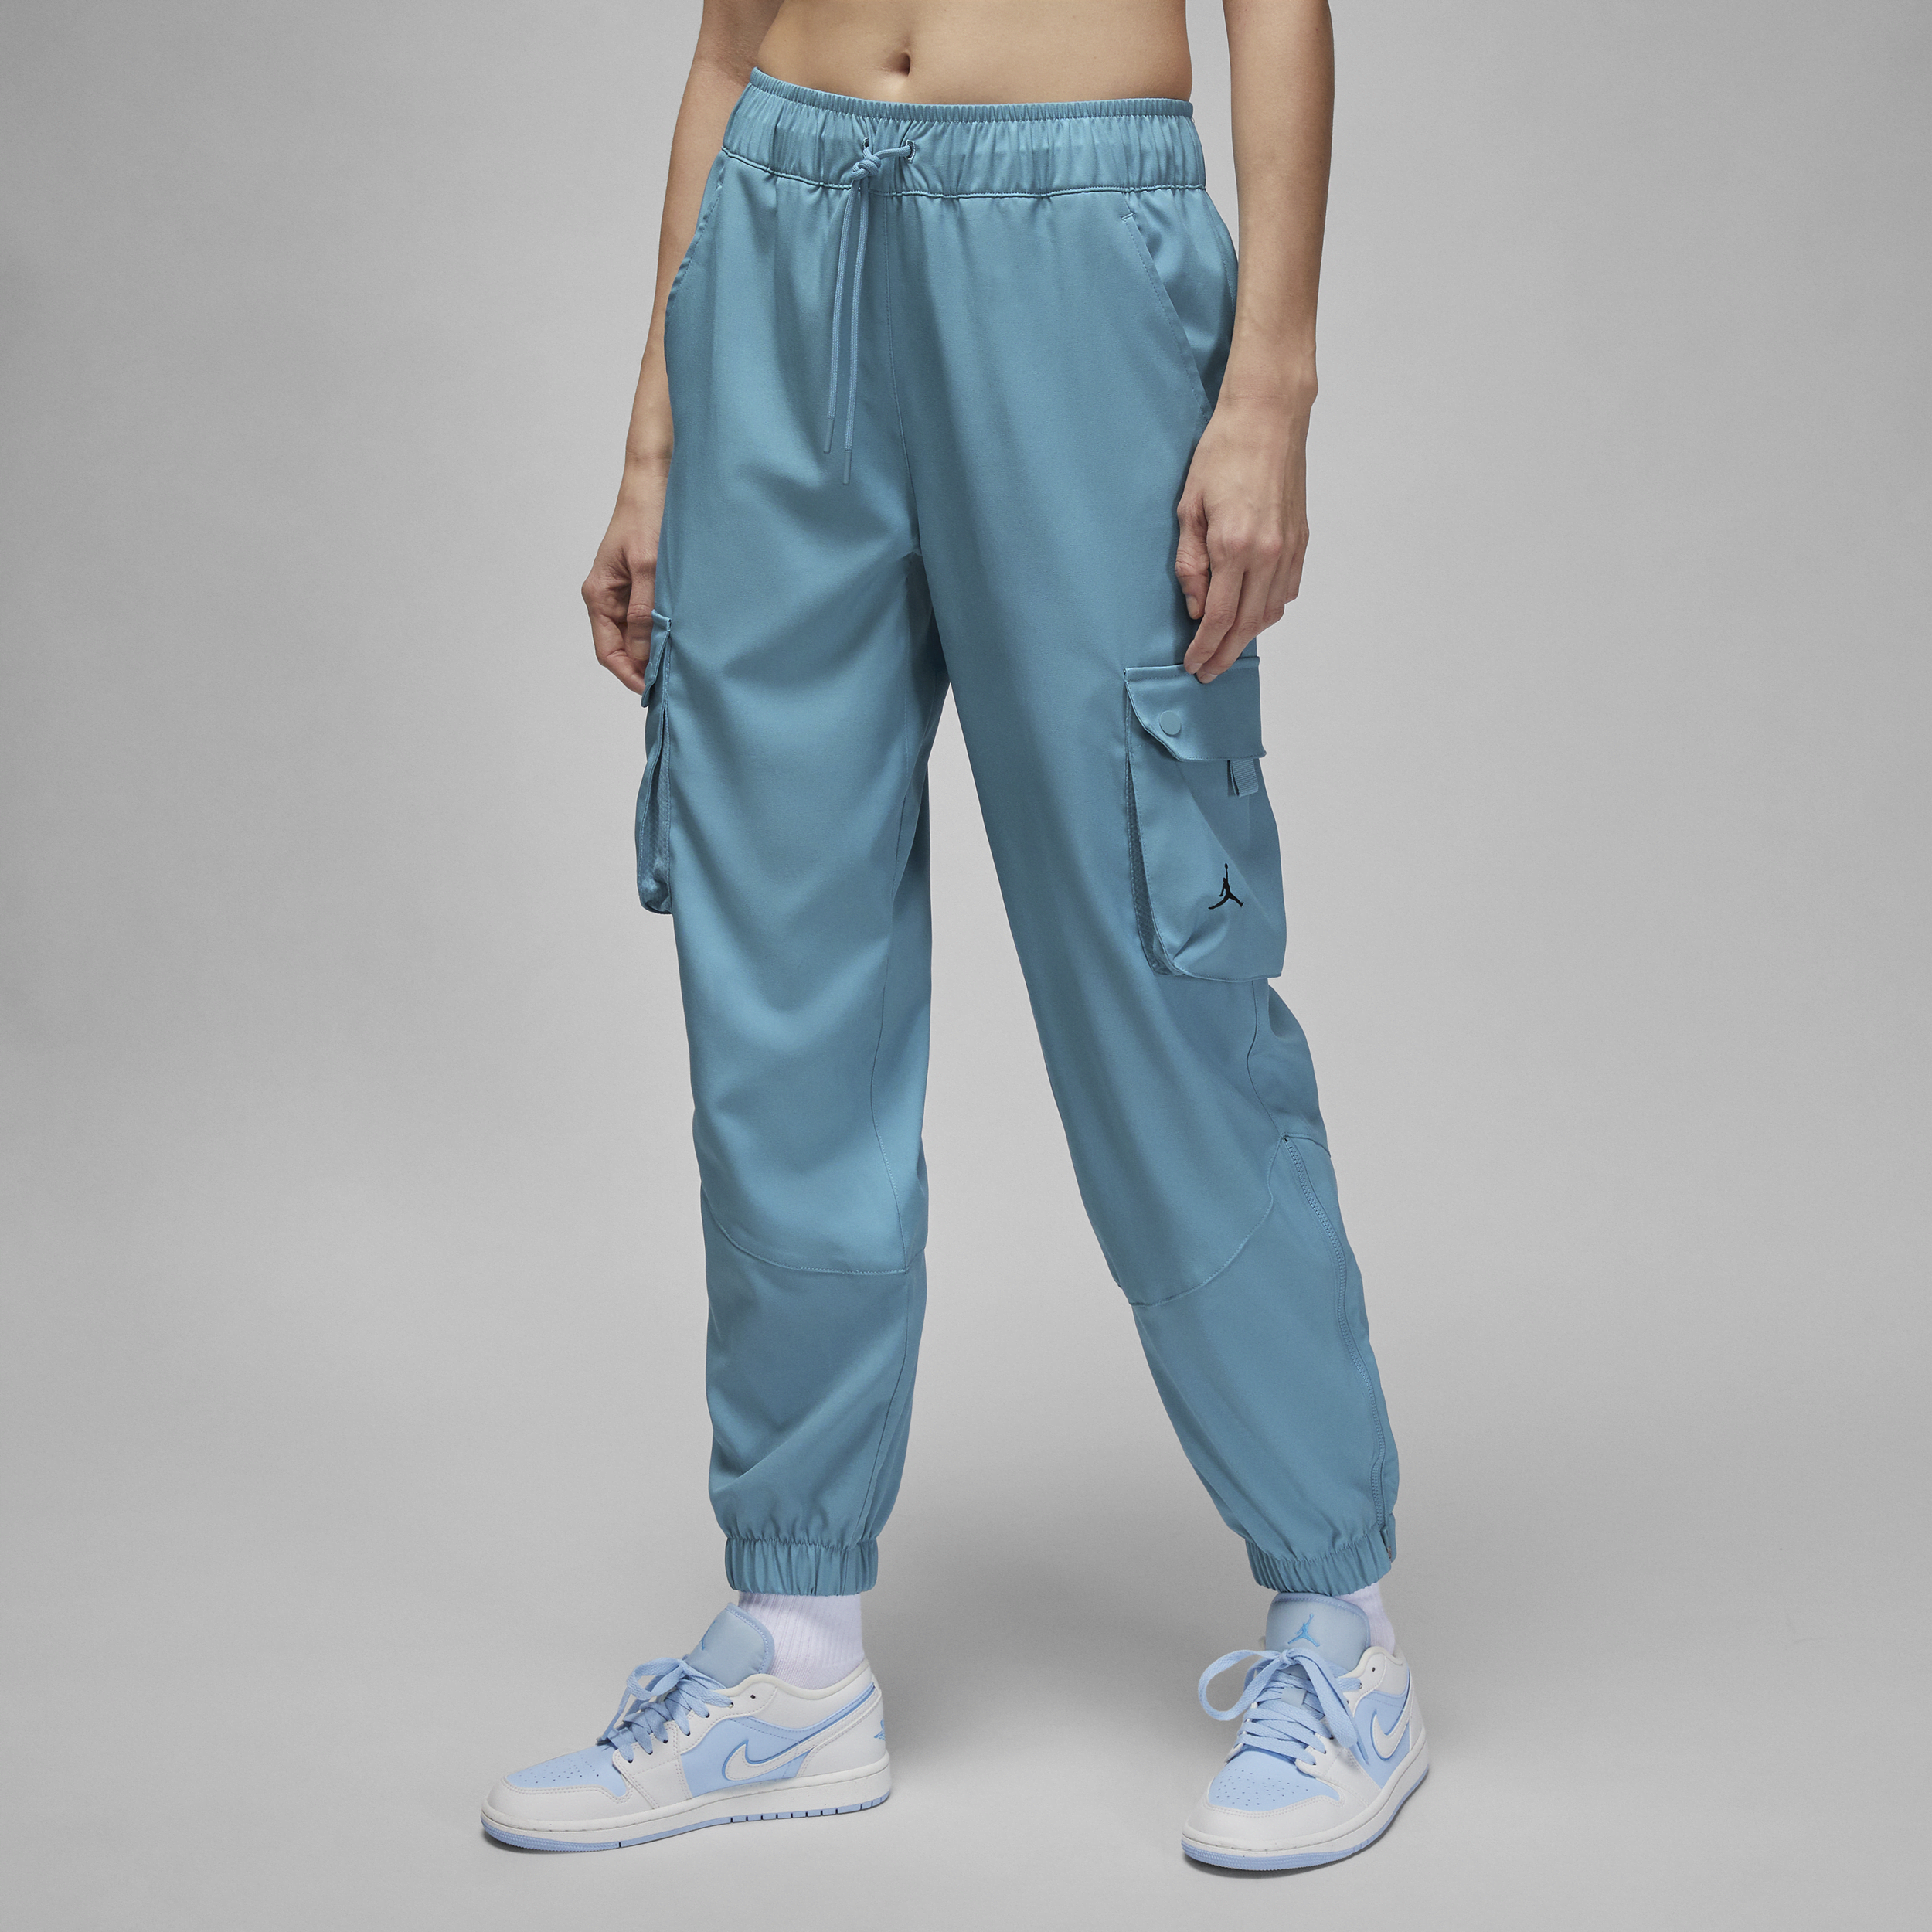 Jordan Sport Tunnel Pantalón - Mujer - Azul